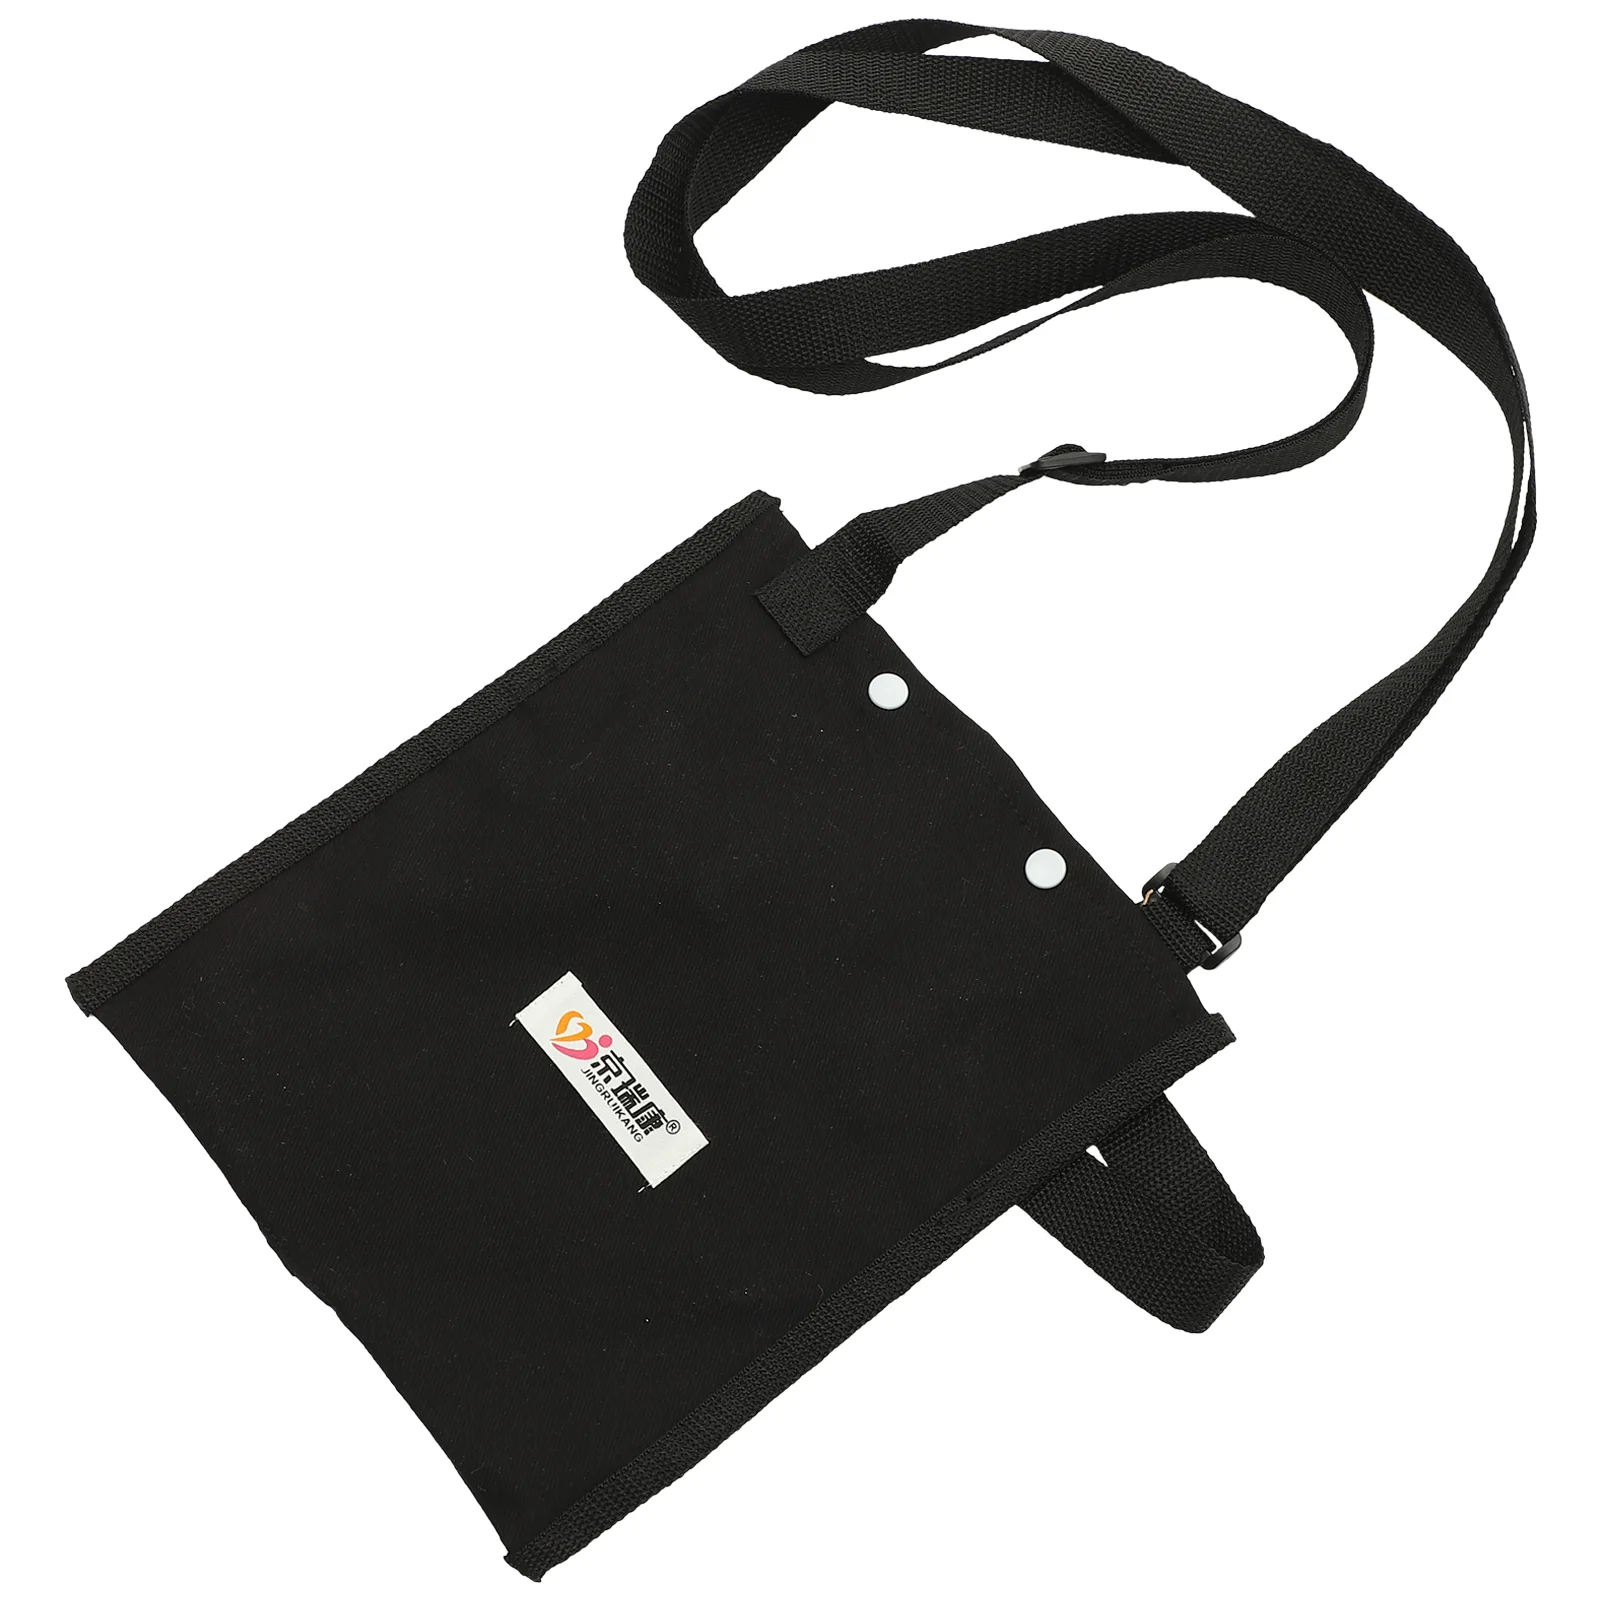 

Urine Bag Shoulder Elder Drainage Detachable Adjustable Catheter Stand Cover Patients Portable Cotton Carrying Backpack Holder